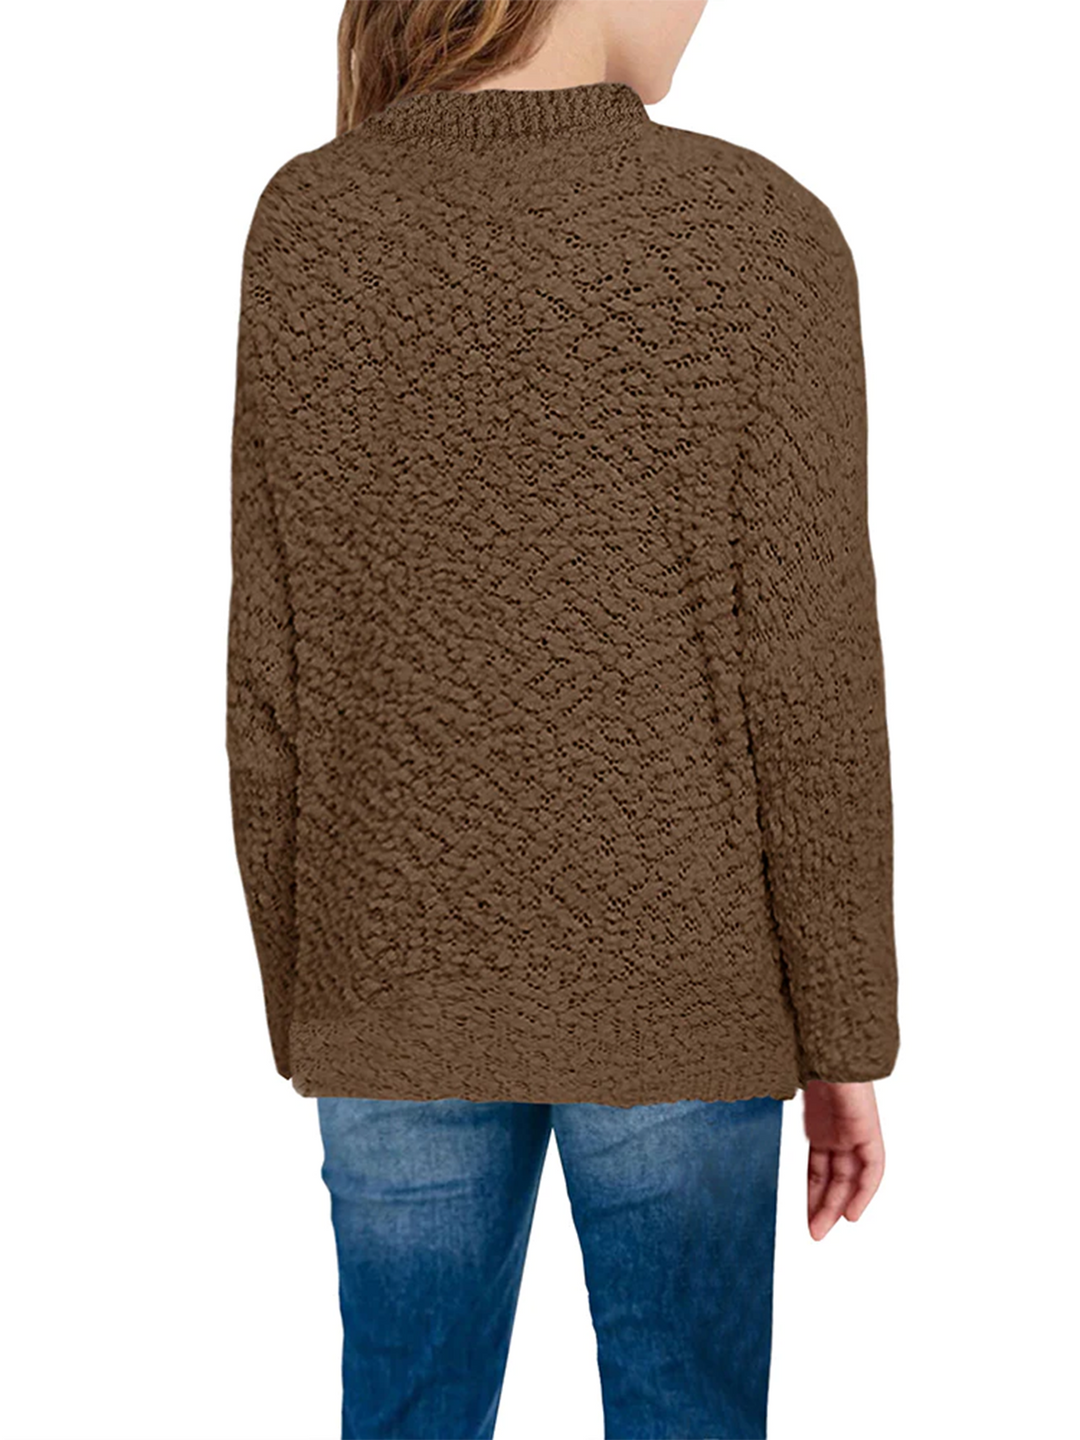 Girls Sweaters Fuzzy Knit Kids Cozy Popcorn Cute Long Sleeve Pullover Tops